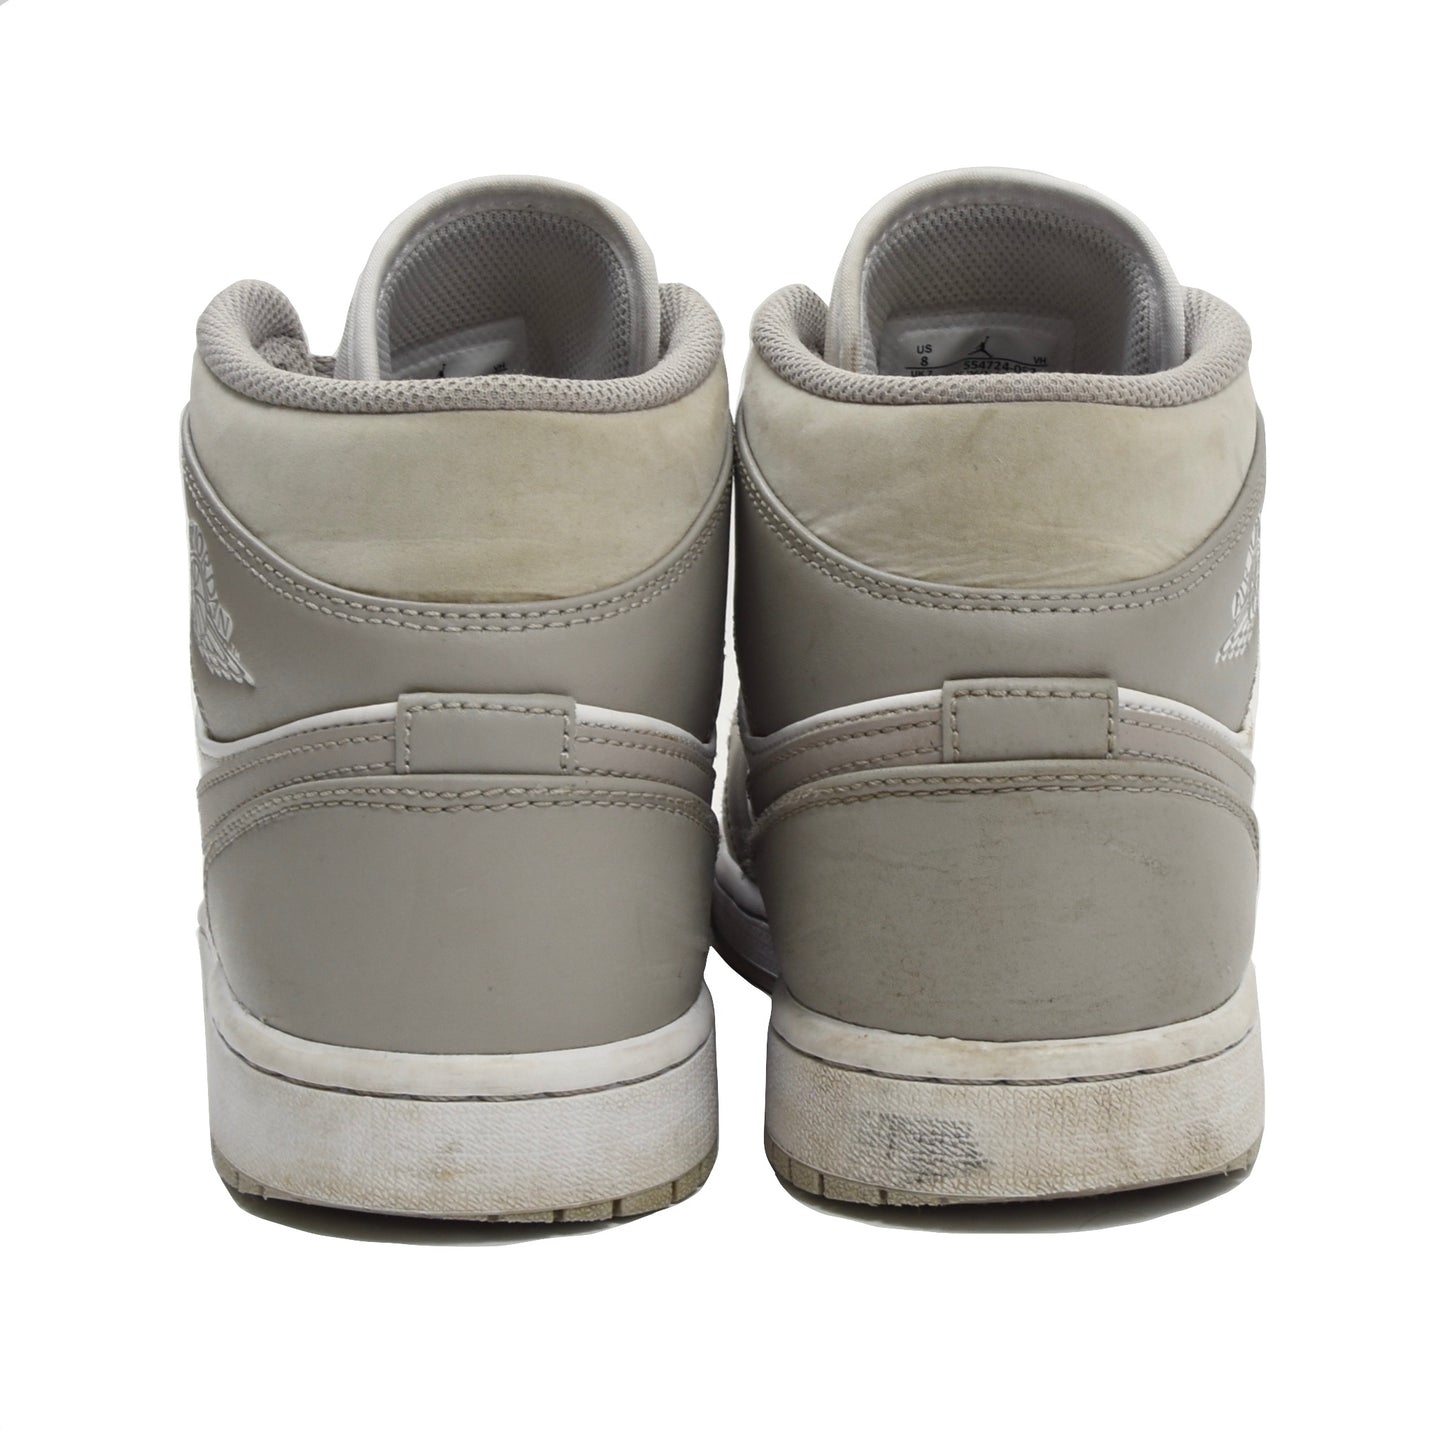 Air Jordan 1 Mid Linen/College Grey Sneakers Size US 8 EU 41